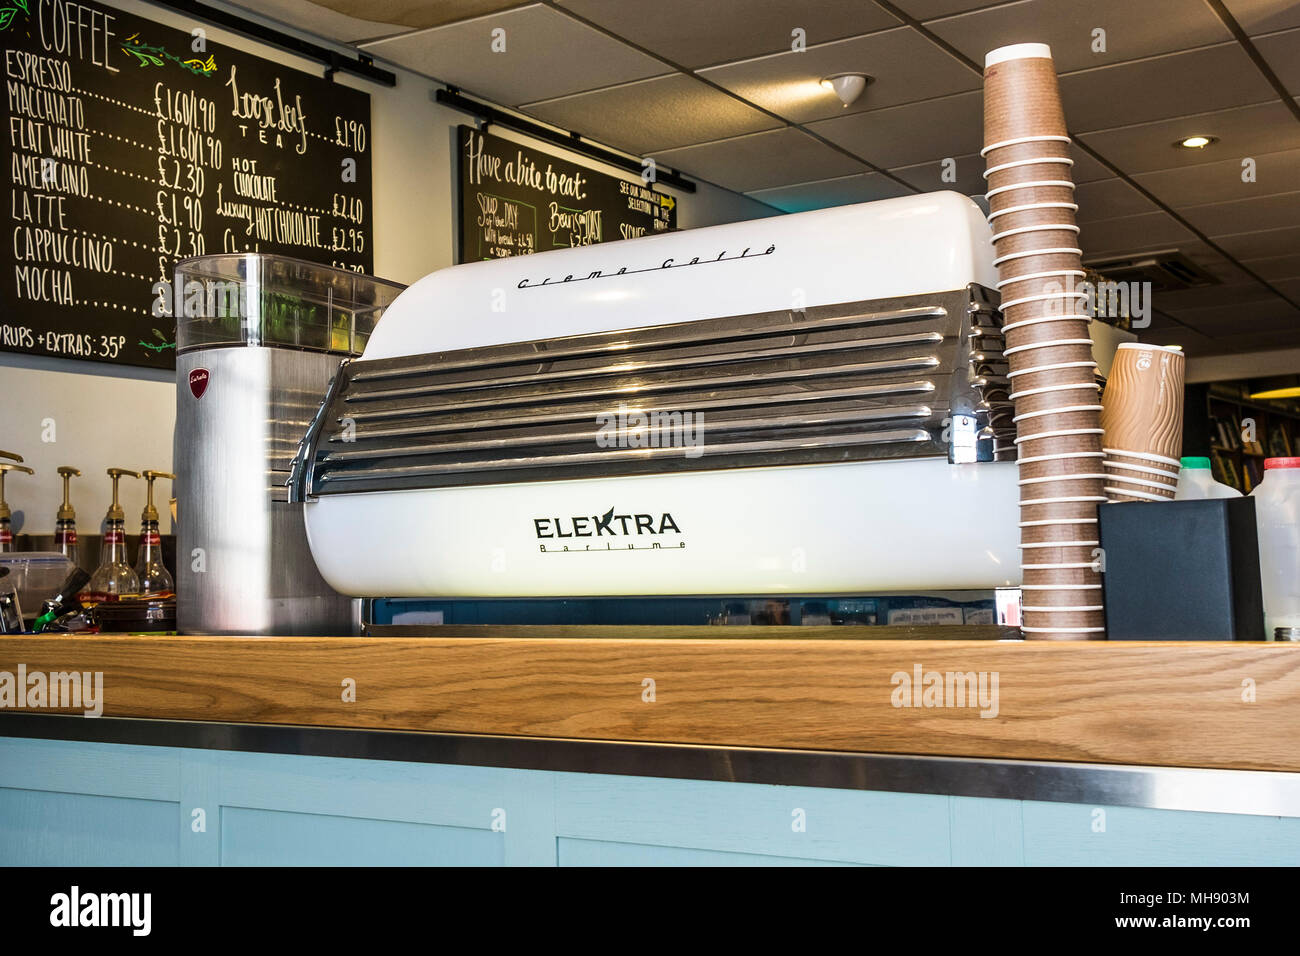 A Creme Caffe Elektra Barlume coffee machine in a coffee shop. Stock Photo